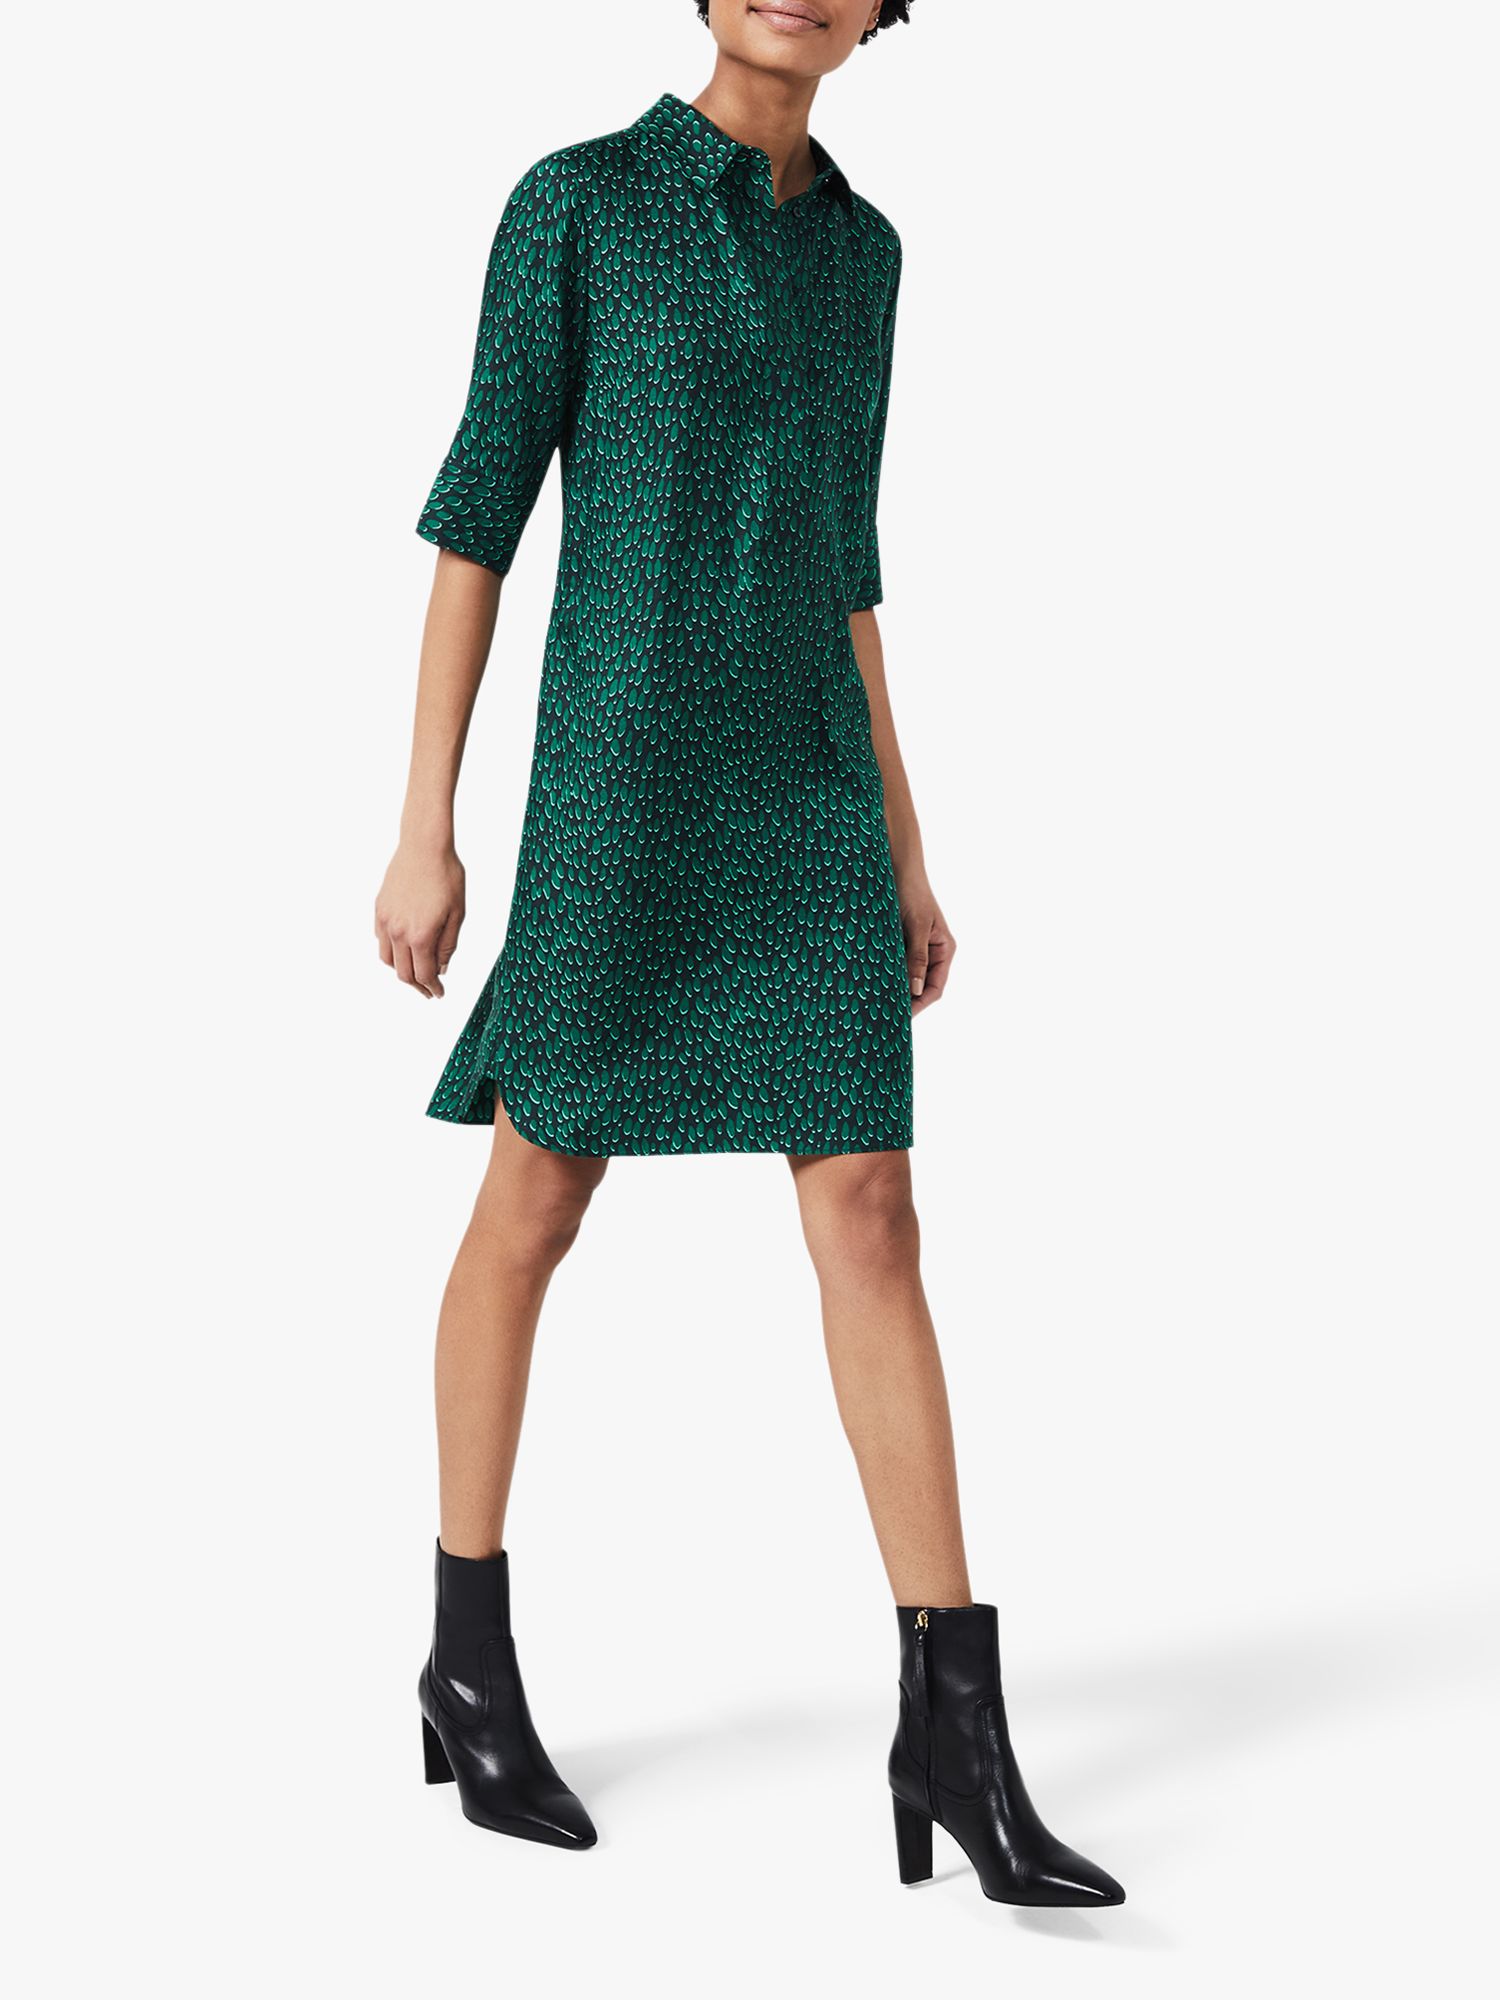 Hobbs Marciella Print Knee Length Dress, Green